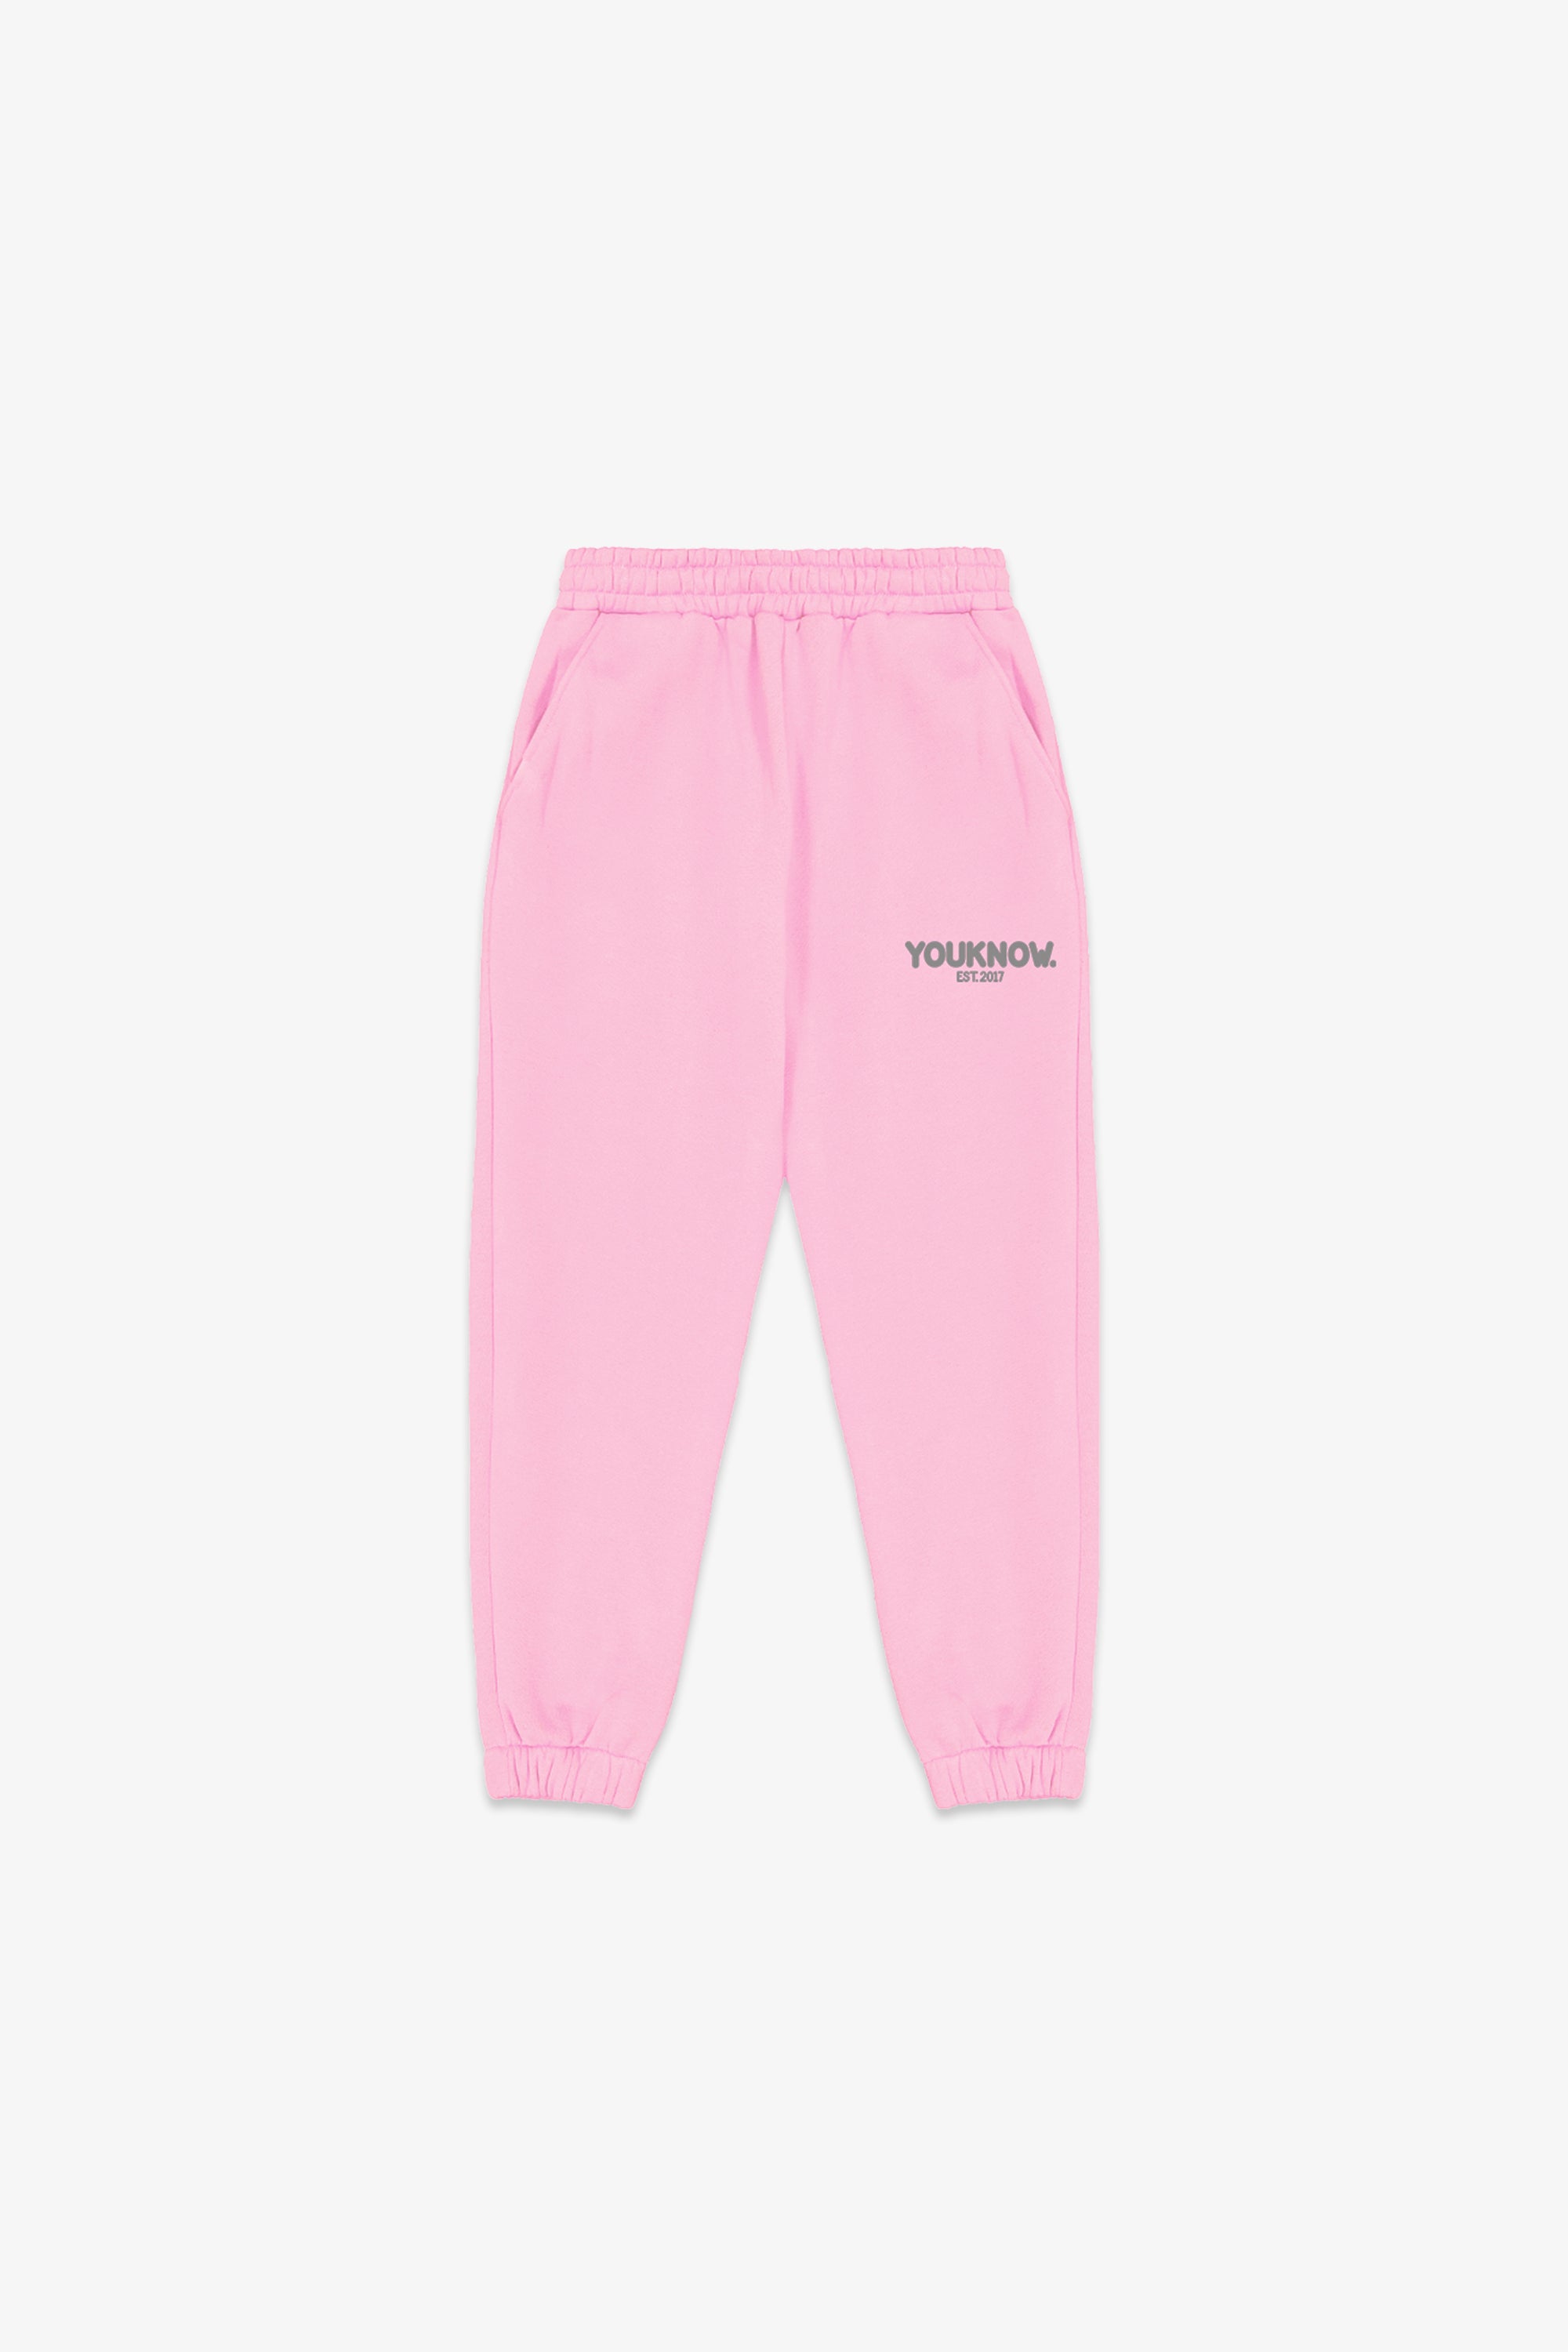 Buy CLUB YORK Women Regular fit Blended Printed Track pants - Pink